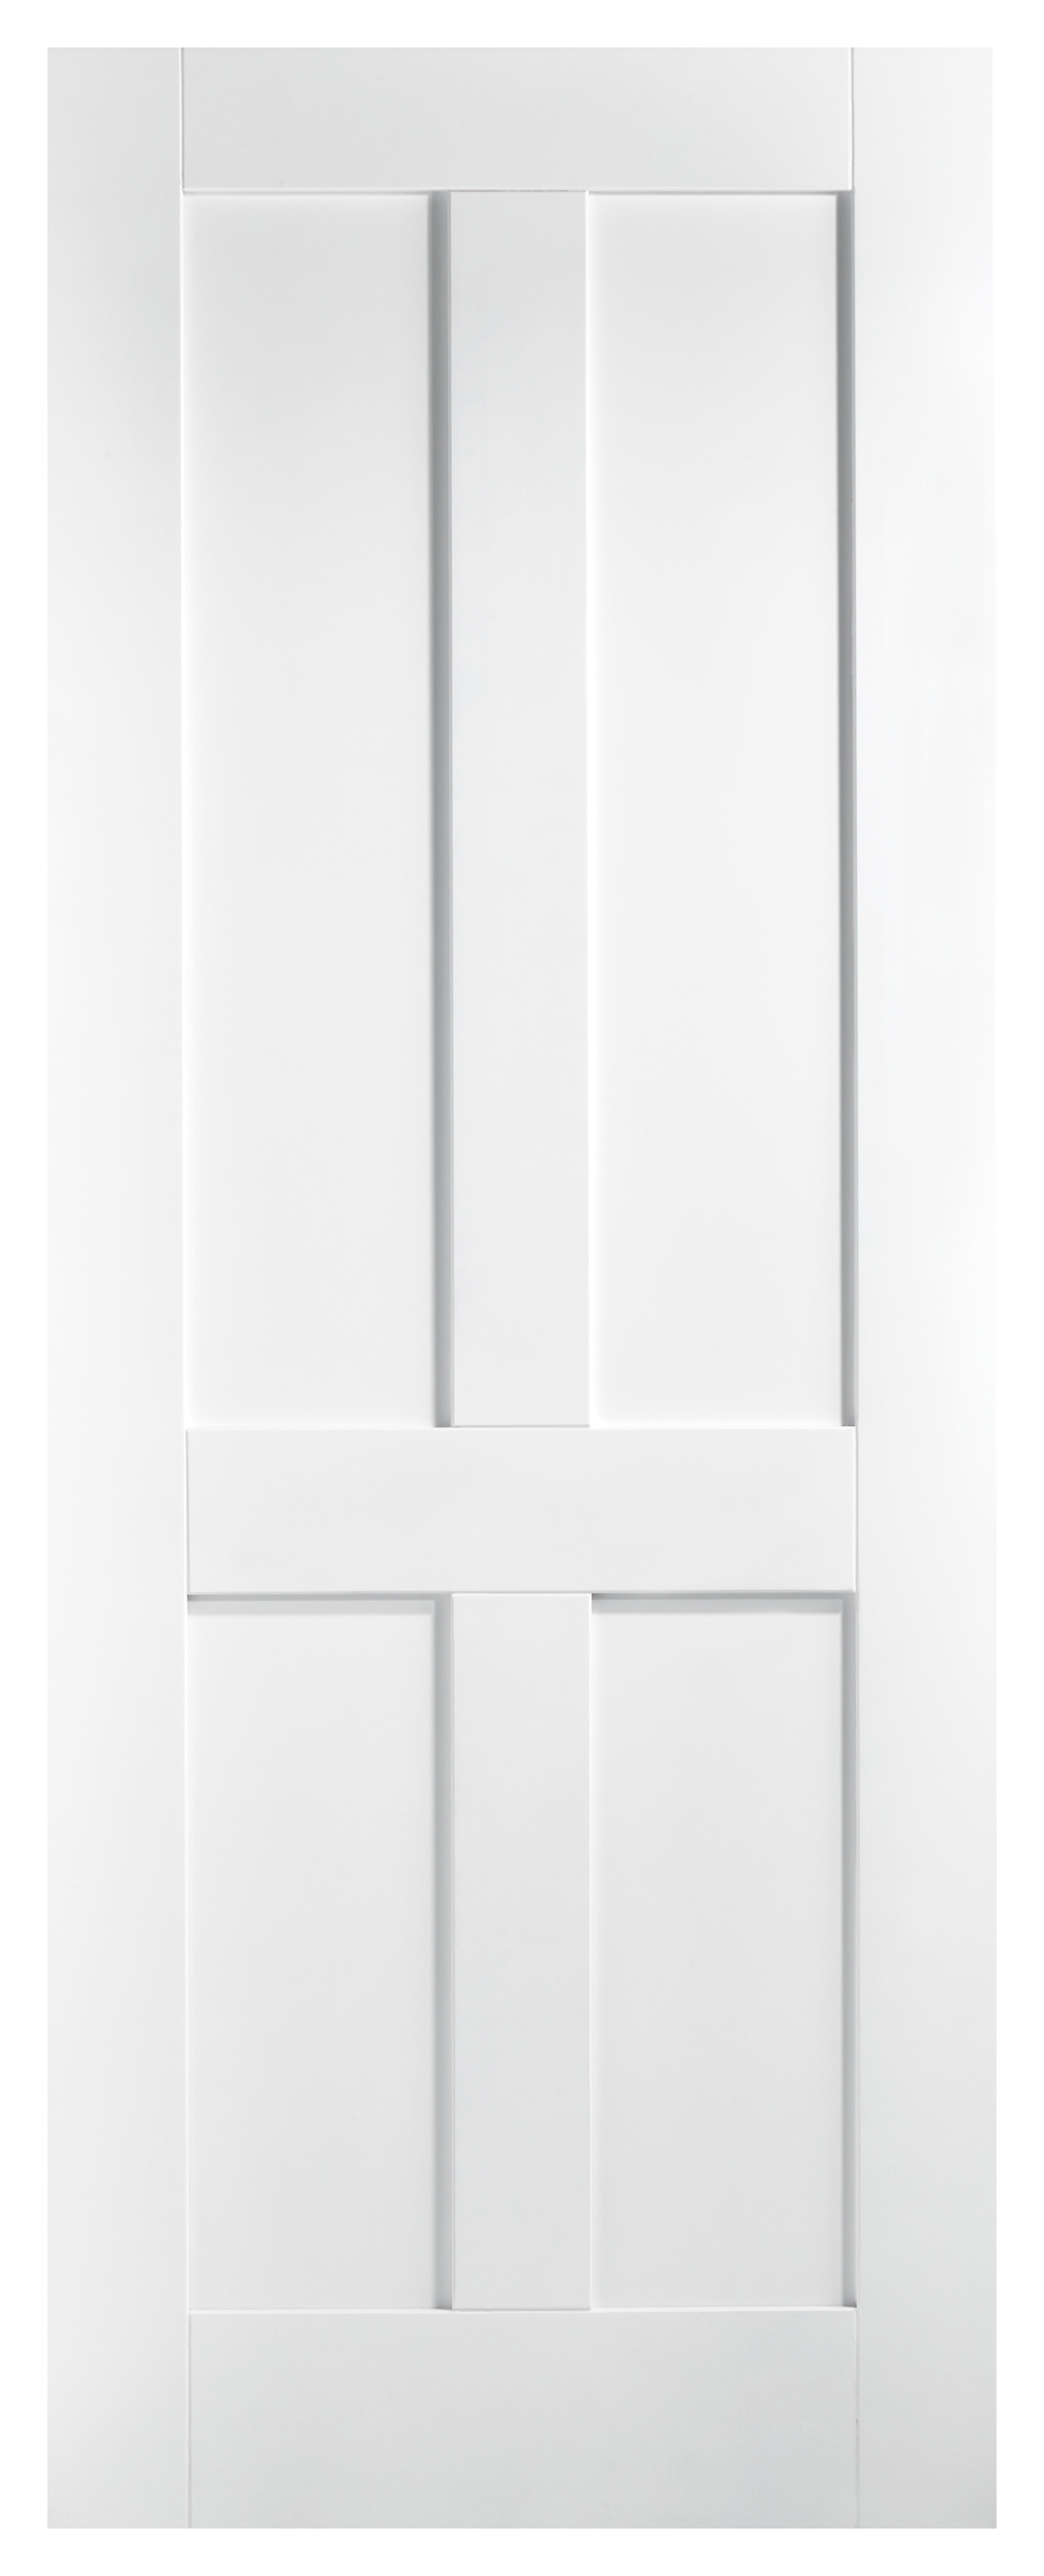 LPD Internal London 4 Panel Primed White Door - 2040mm